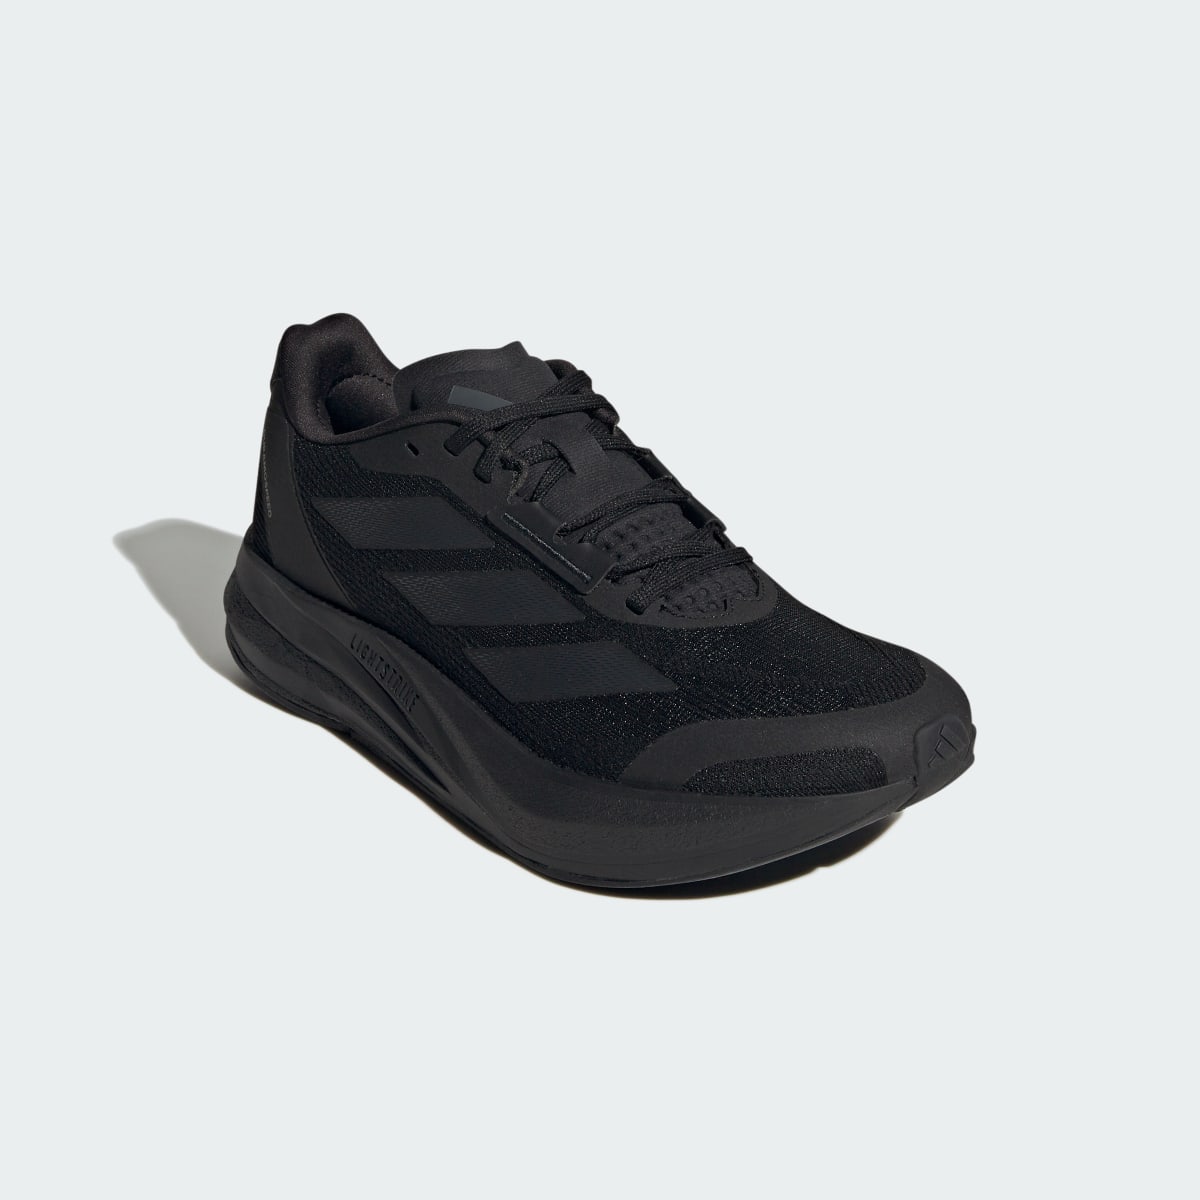 Adidas Duramo Speed Running Shoes. 5